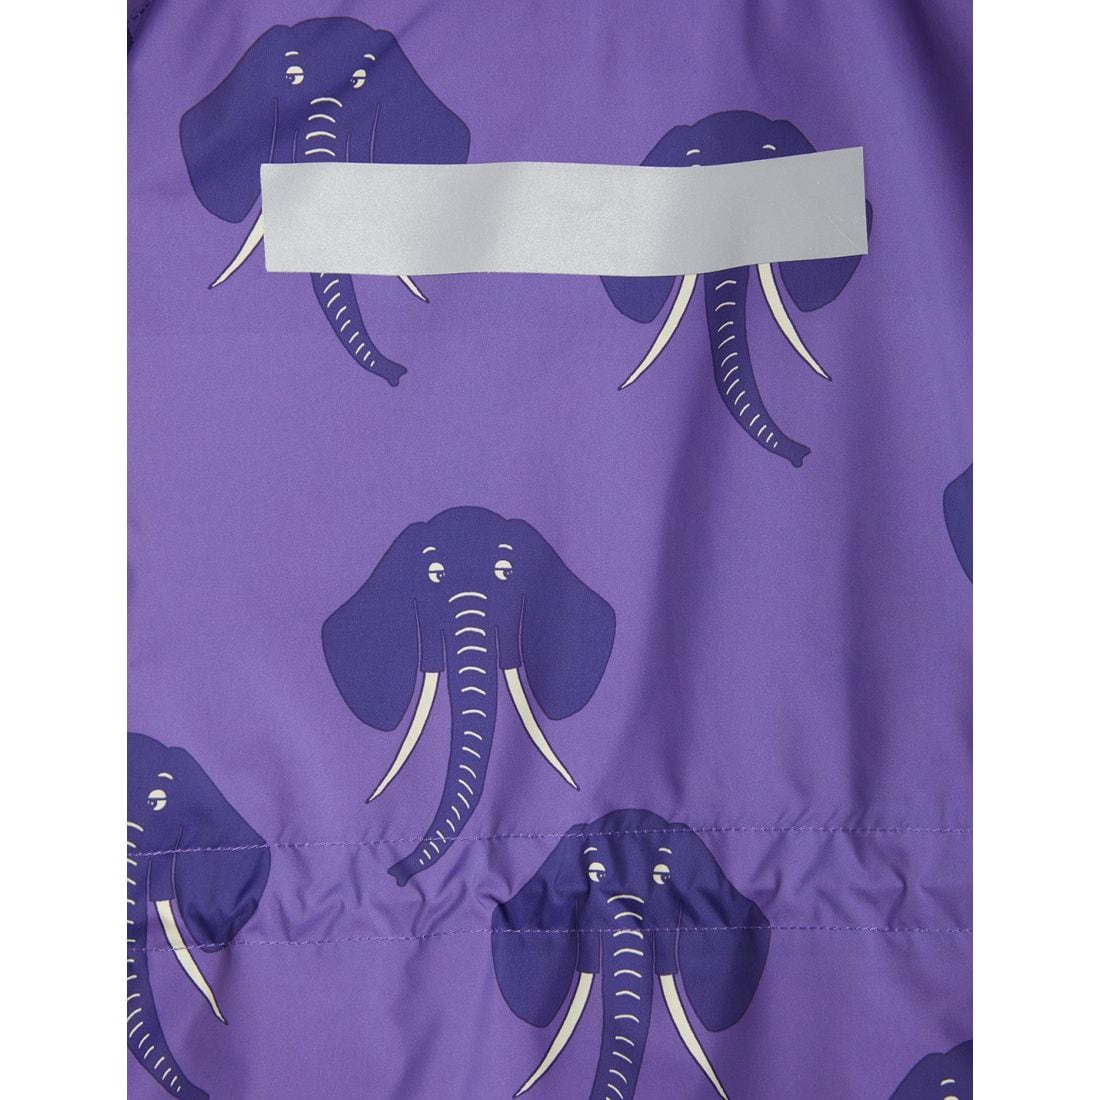 Mini Rodini Elephant Shell Jacket Purple